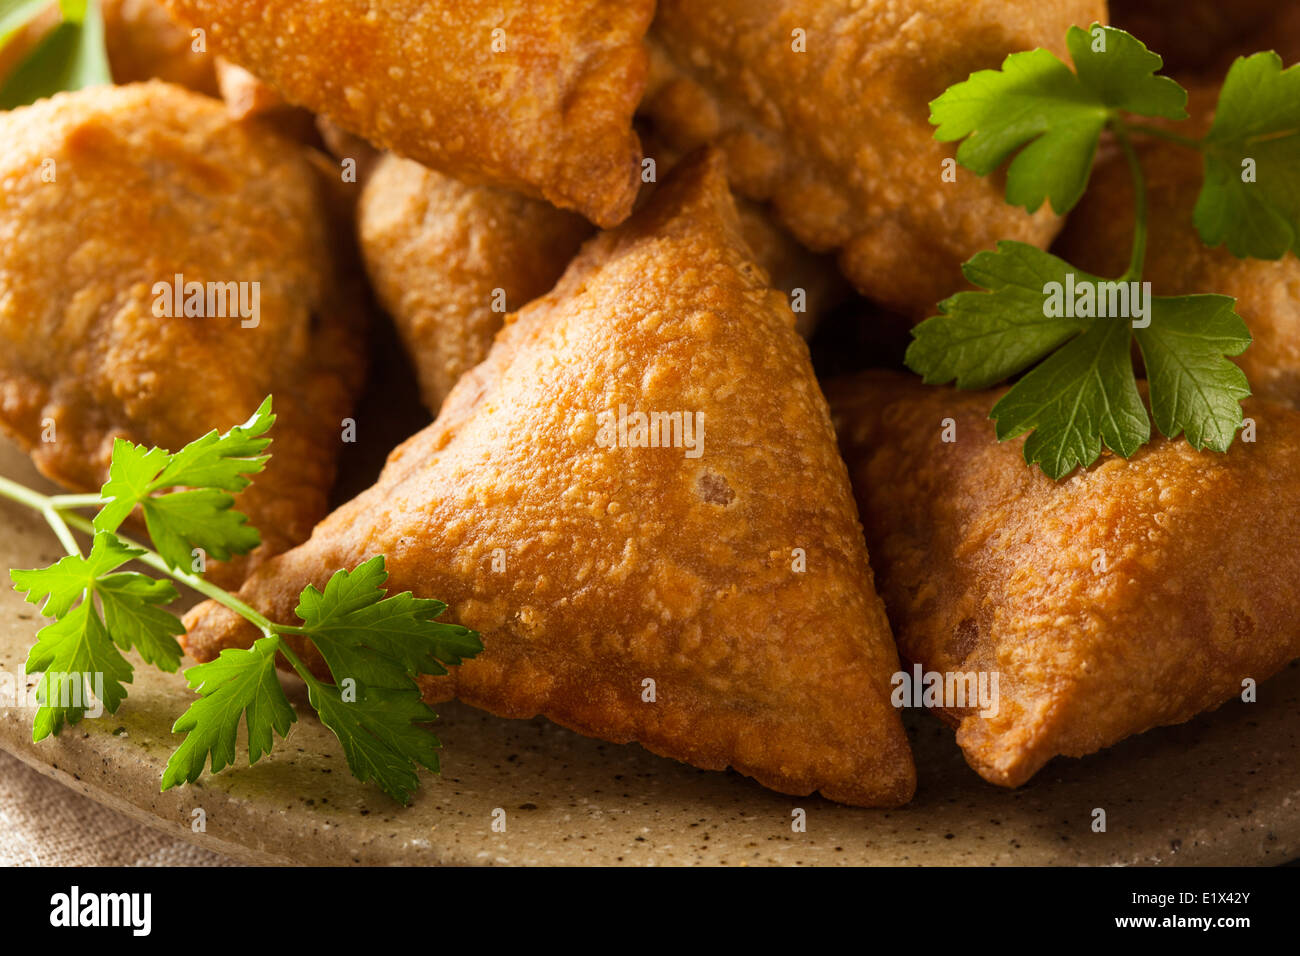 Homemade Fried Indian Samosas with Mint Chutney Sauce Stock Photo